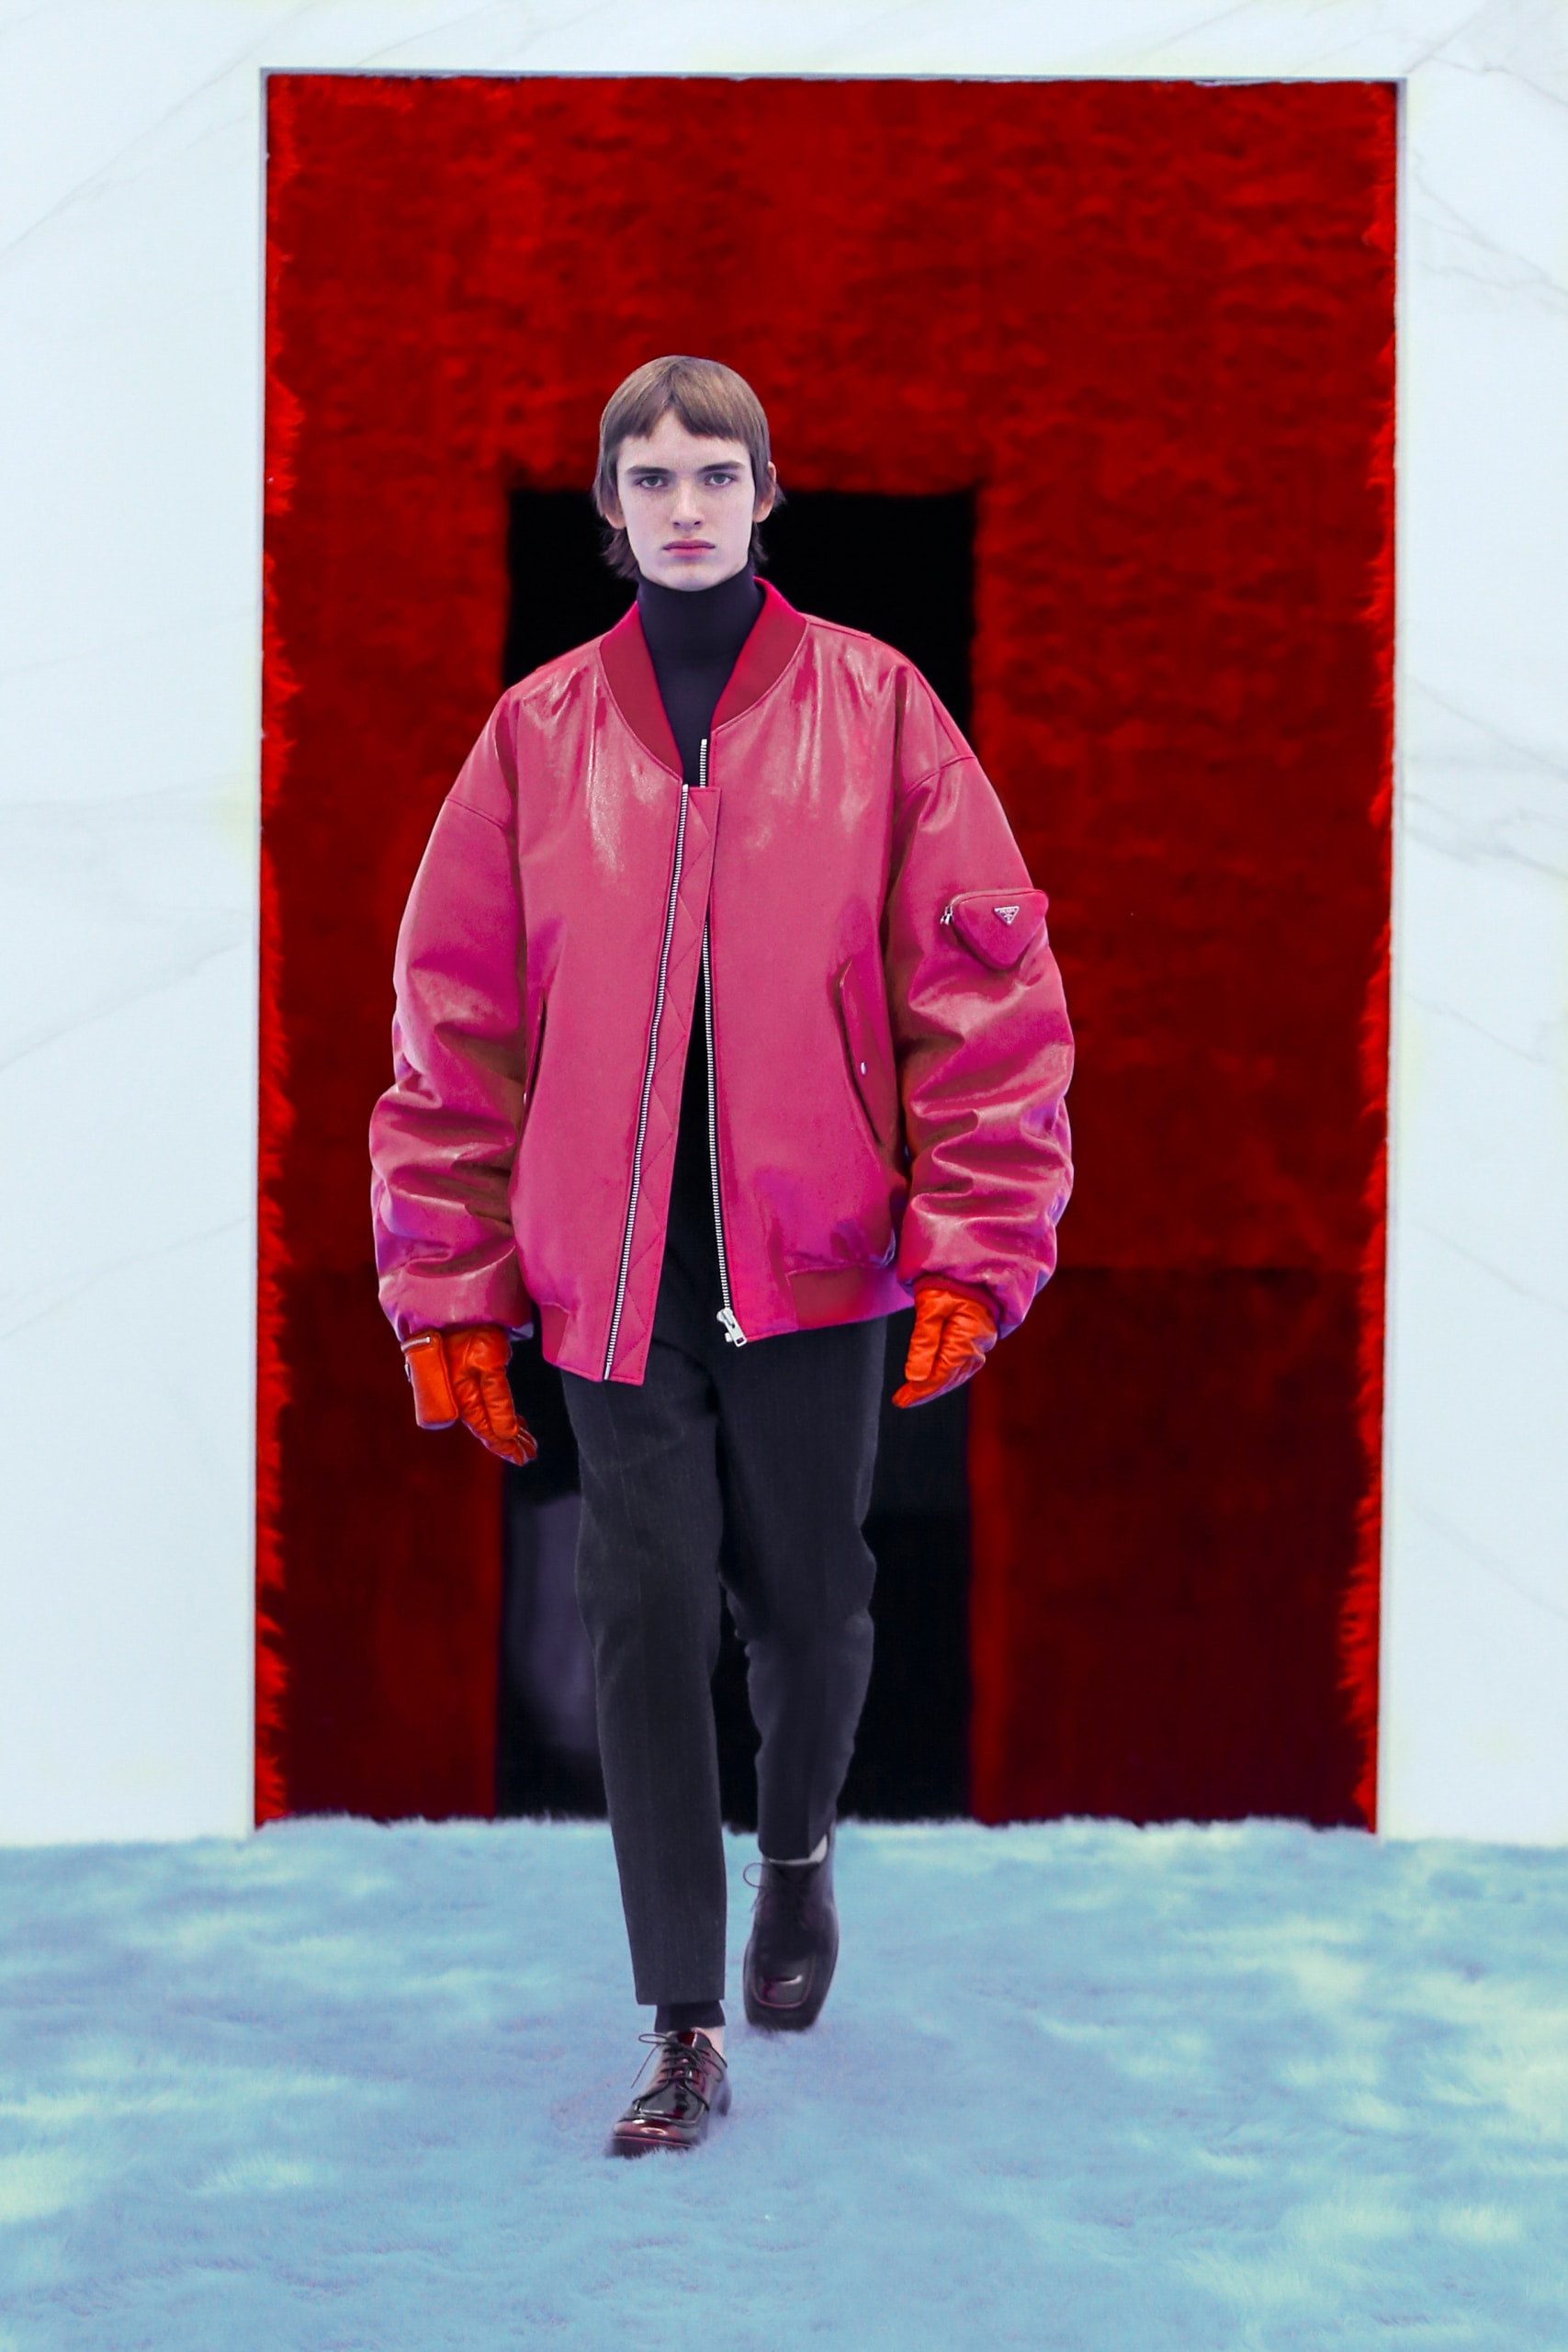 Prada Menswear Fall/Winter 2021 Collection Runway Show Raf Simons Debut Coats Bomber Jackets